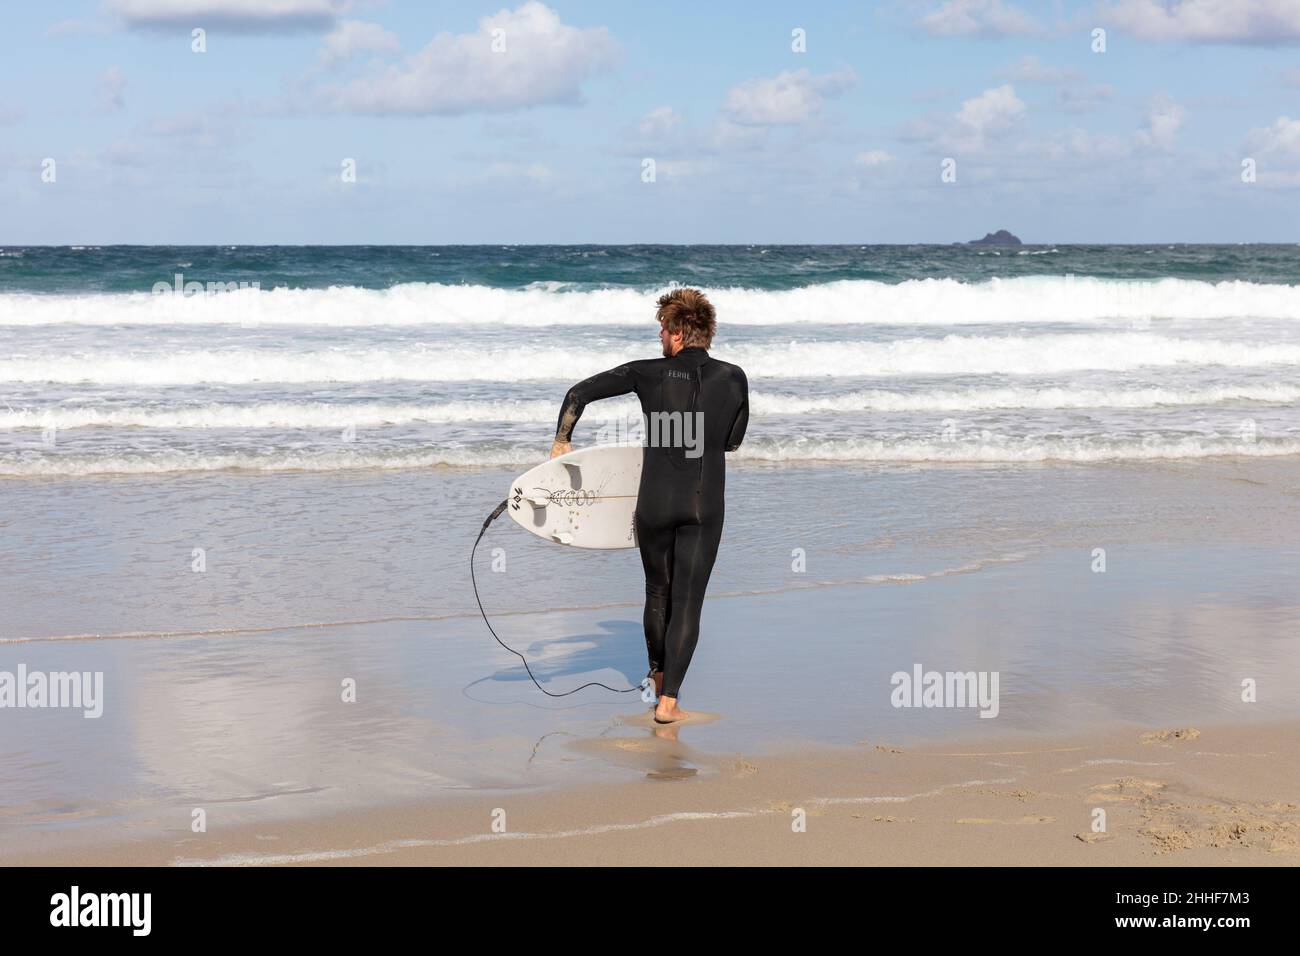 Surfer, surfer and surfboard, surfboard, Hayle beach, Cornwall, UK, England, Cornwall surfer, Cornwall surfboarding, surfboarder, surf boarder, sea Stock Photo